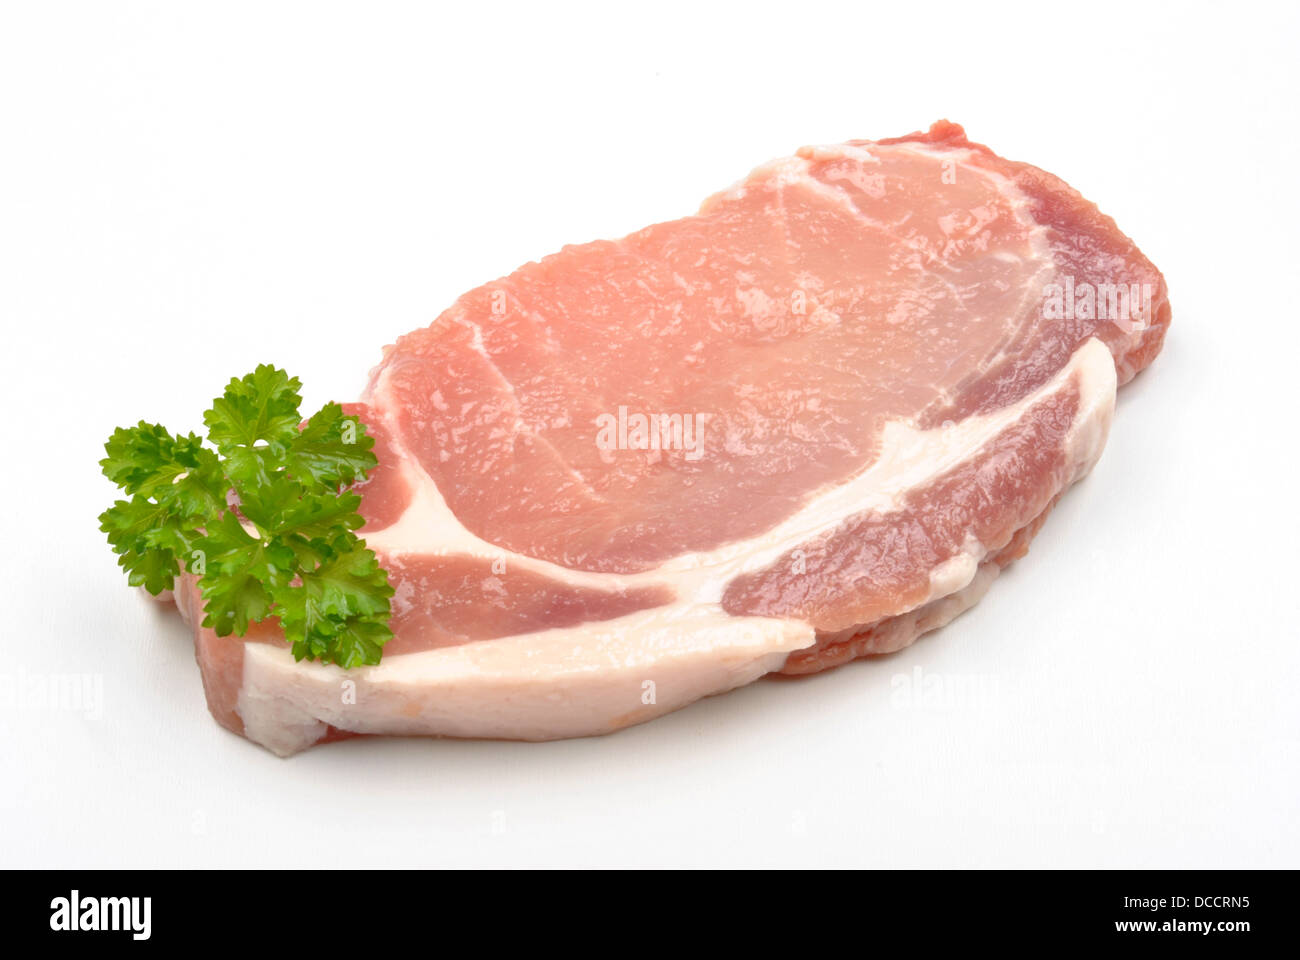 one raw organic pork chop and parsley Stock Photo